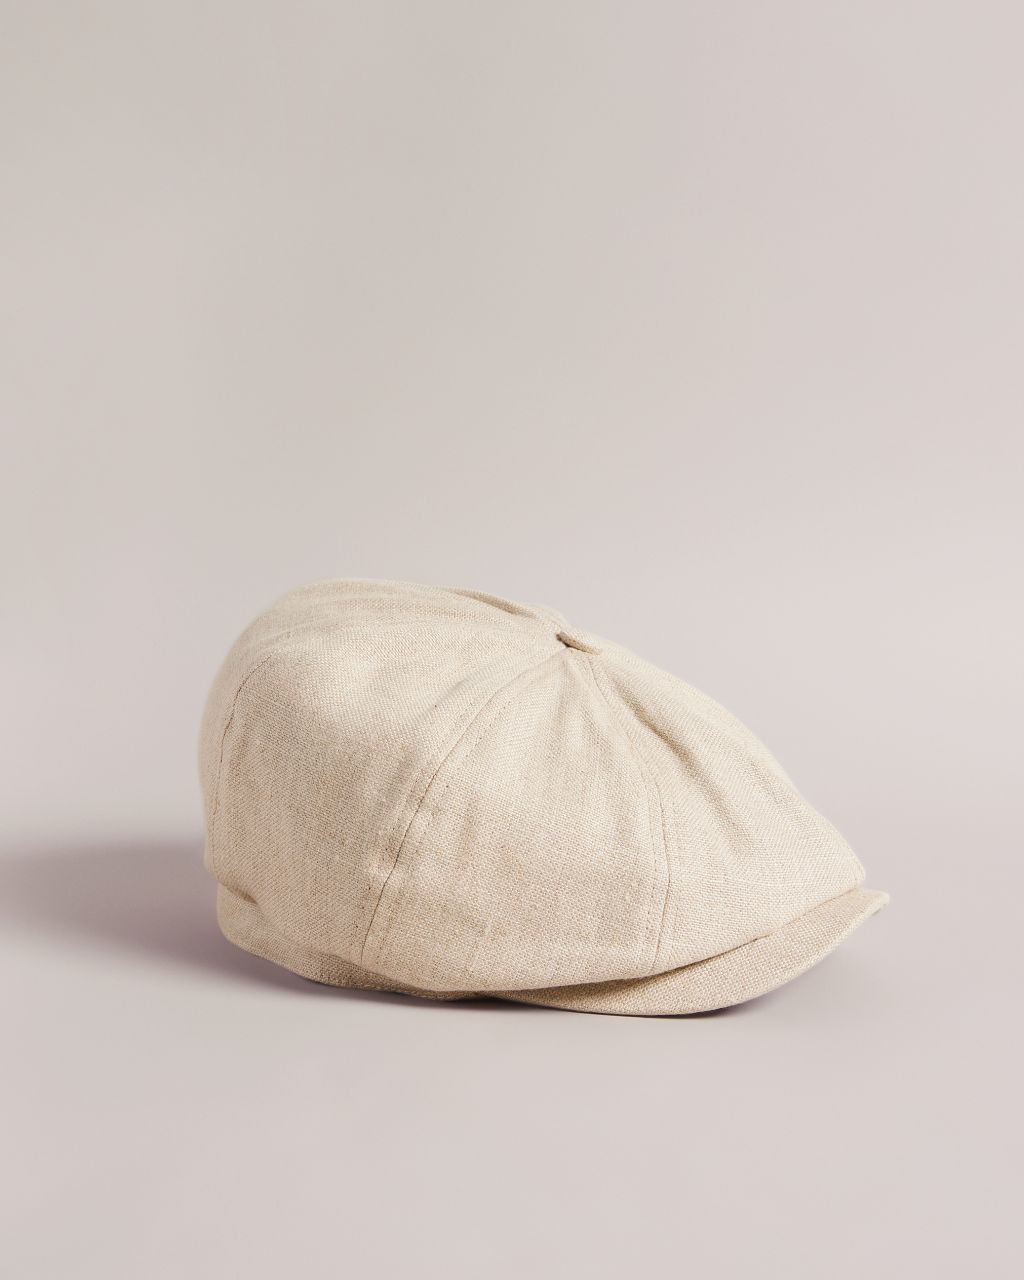 Ted Baker Men's Linen Baker Boy Hat in Ecru, Heber